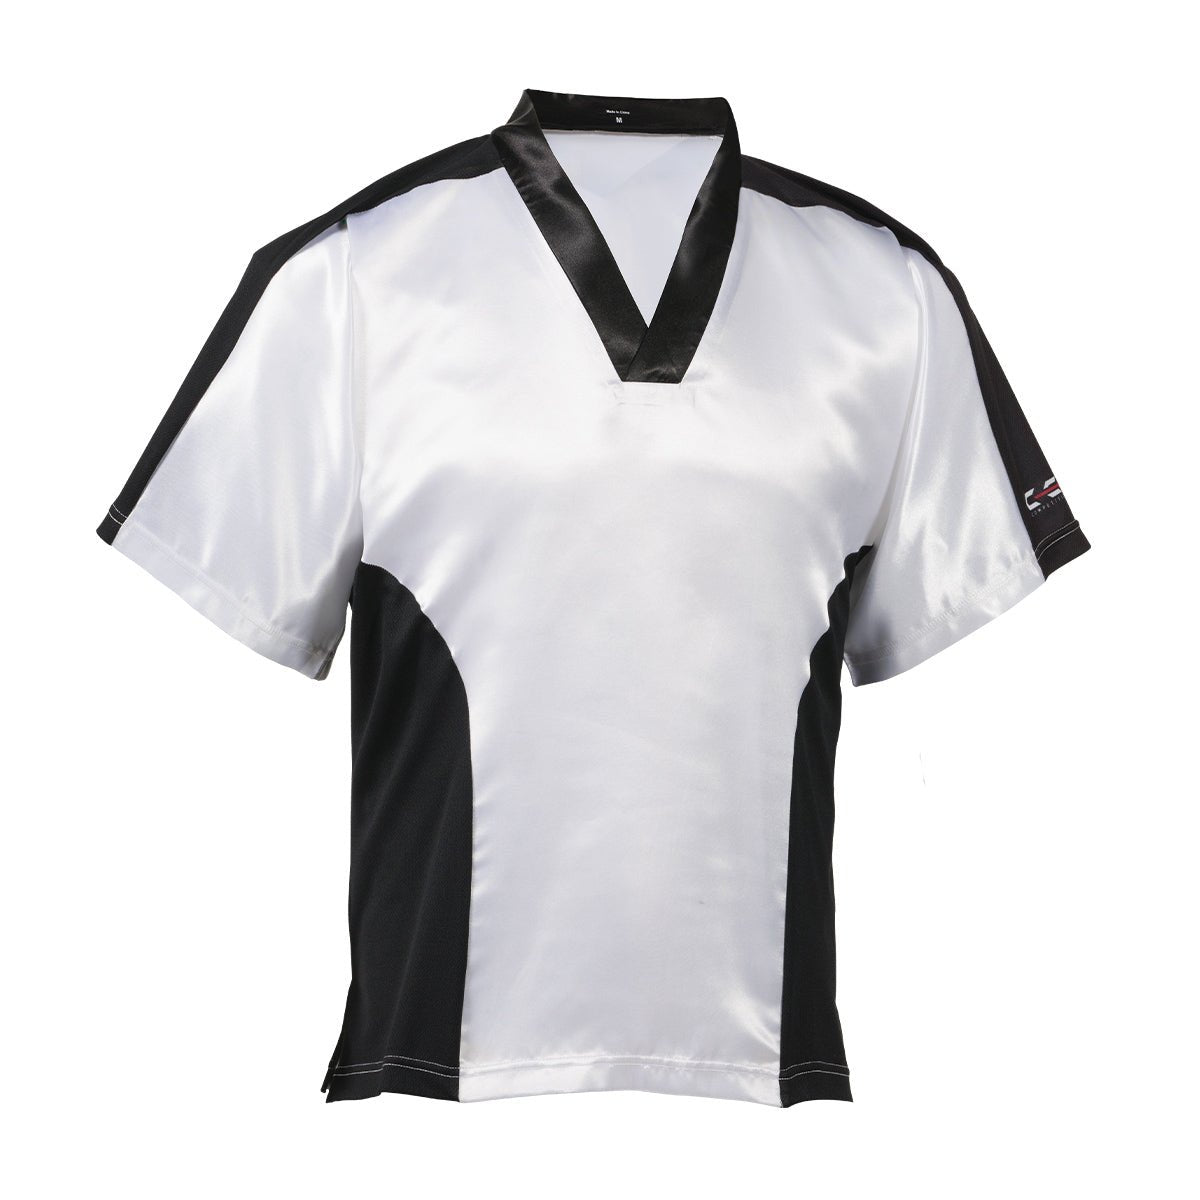 C-Gear Honor Uniform Top Medium White Black